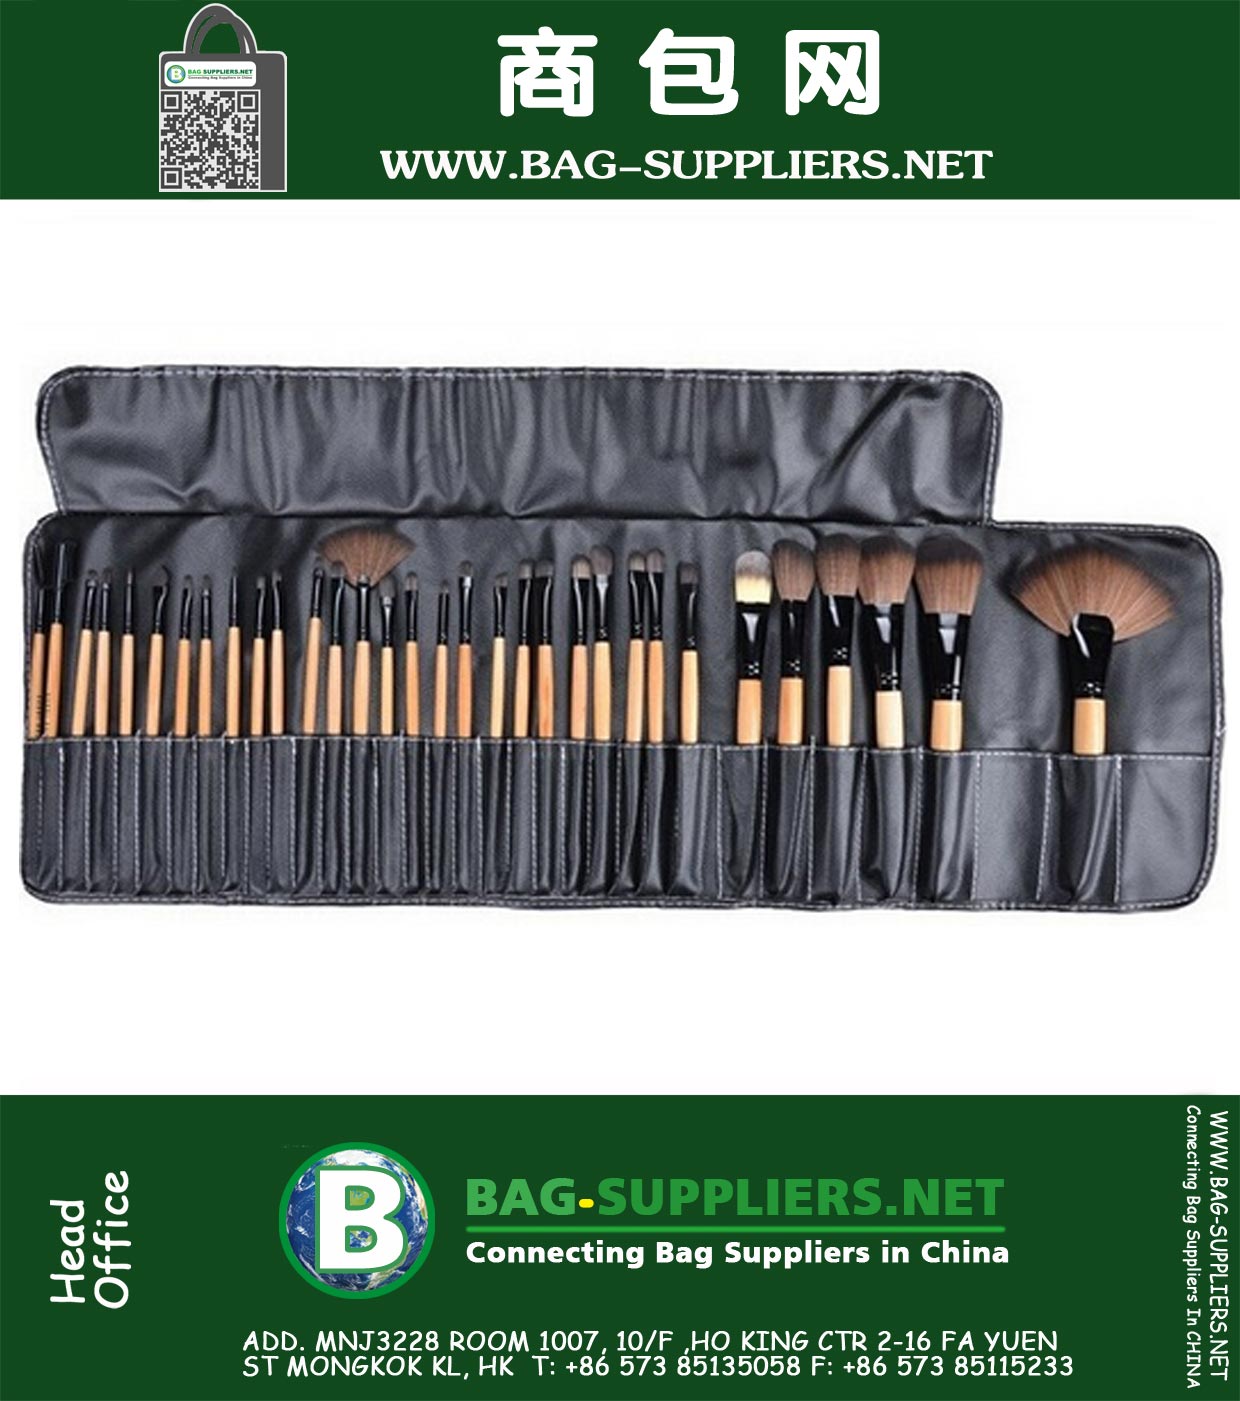 32pcs Makeup Brush Sets Professional Cosmetics Brushes Eyebrow Eye Brow Powder Lipsticks Shadows Make Up Tool Kit Pouch Bag